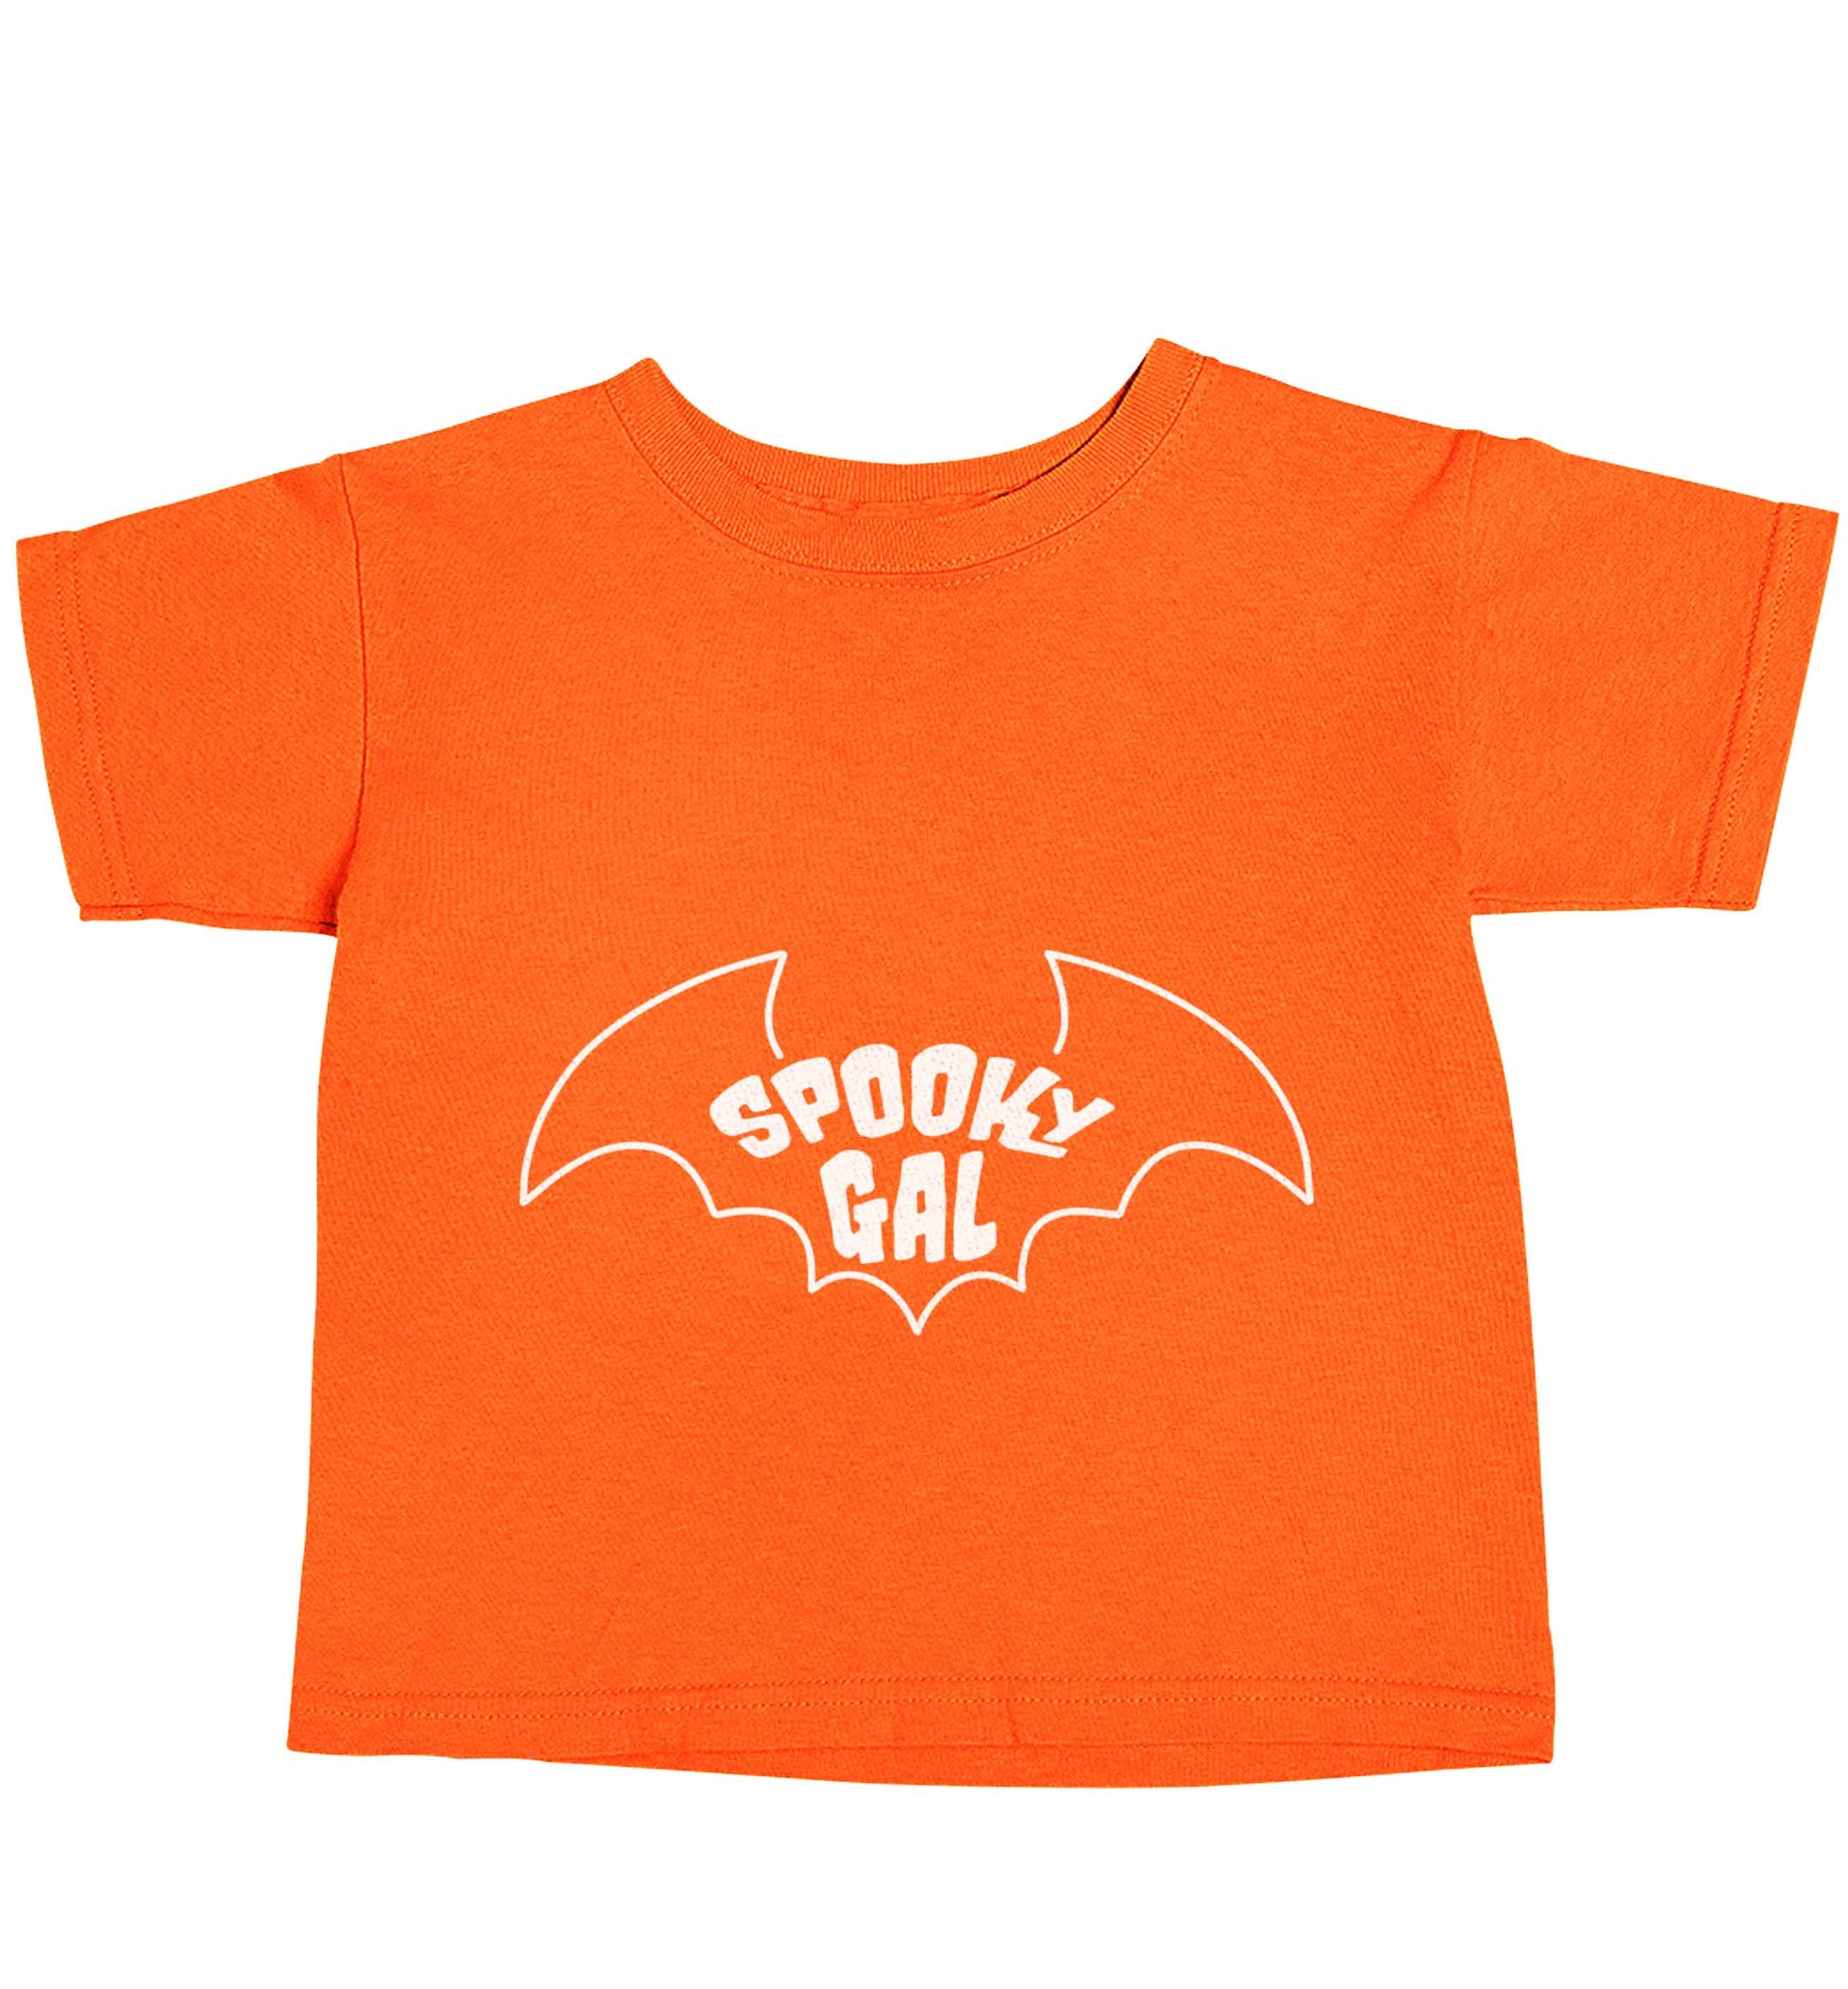 Spooky gal Kit orange baby toddler Tshirt 2 Years